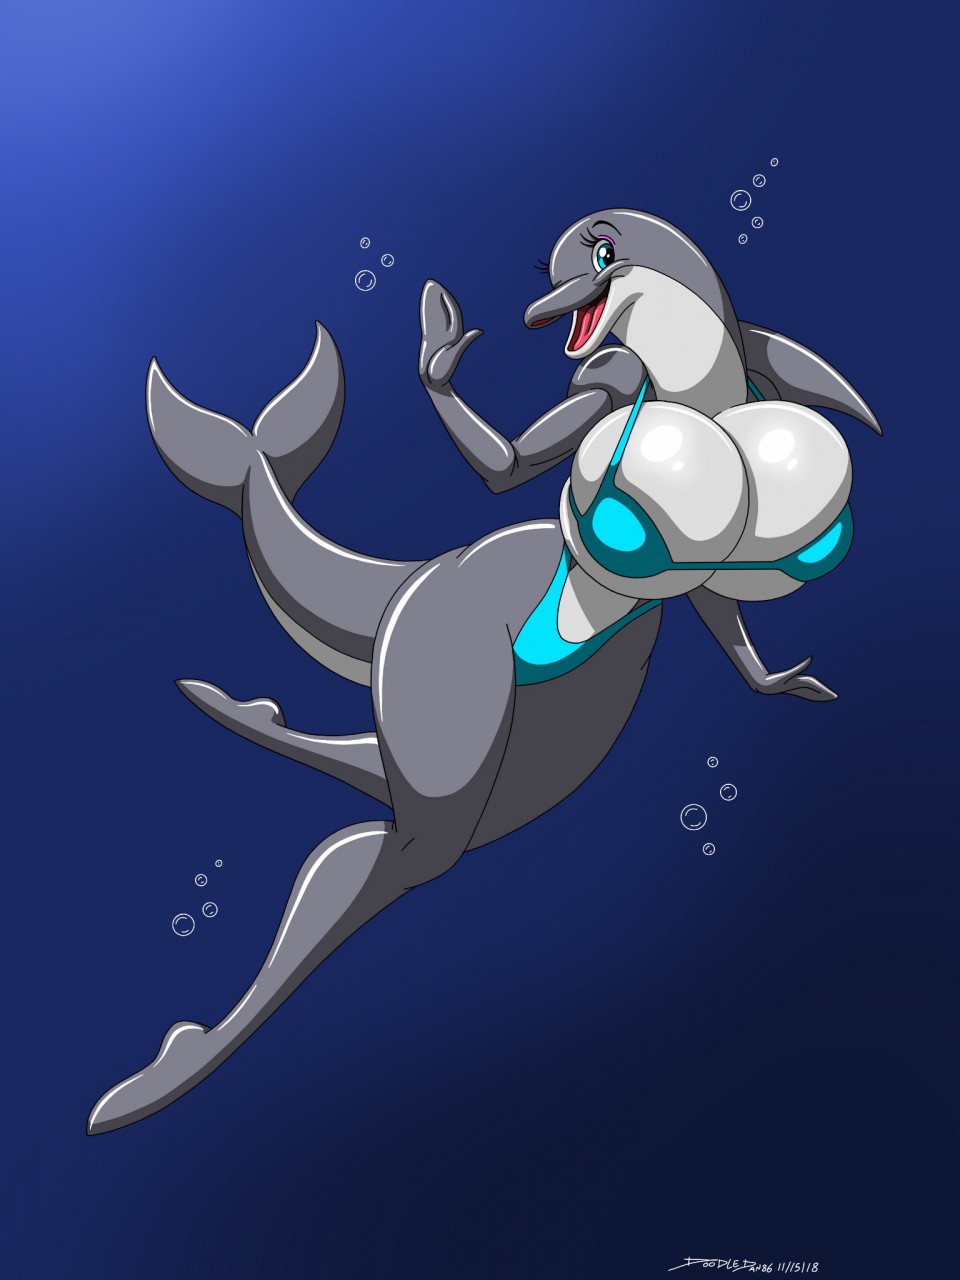 Dolphin boobs